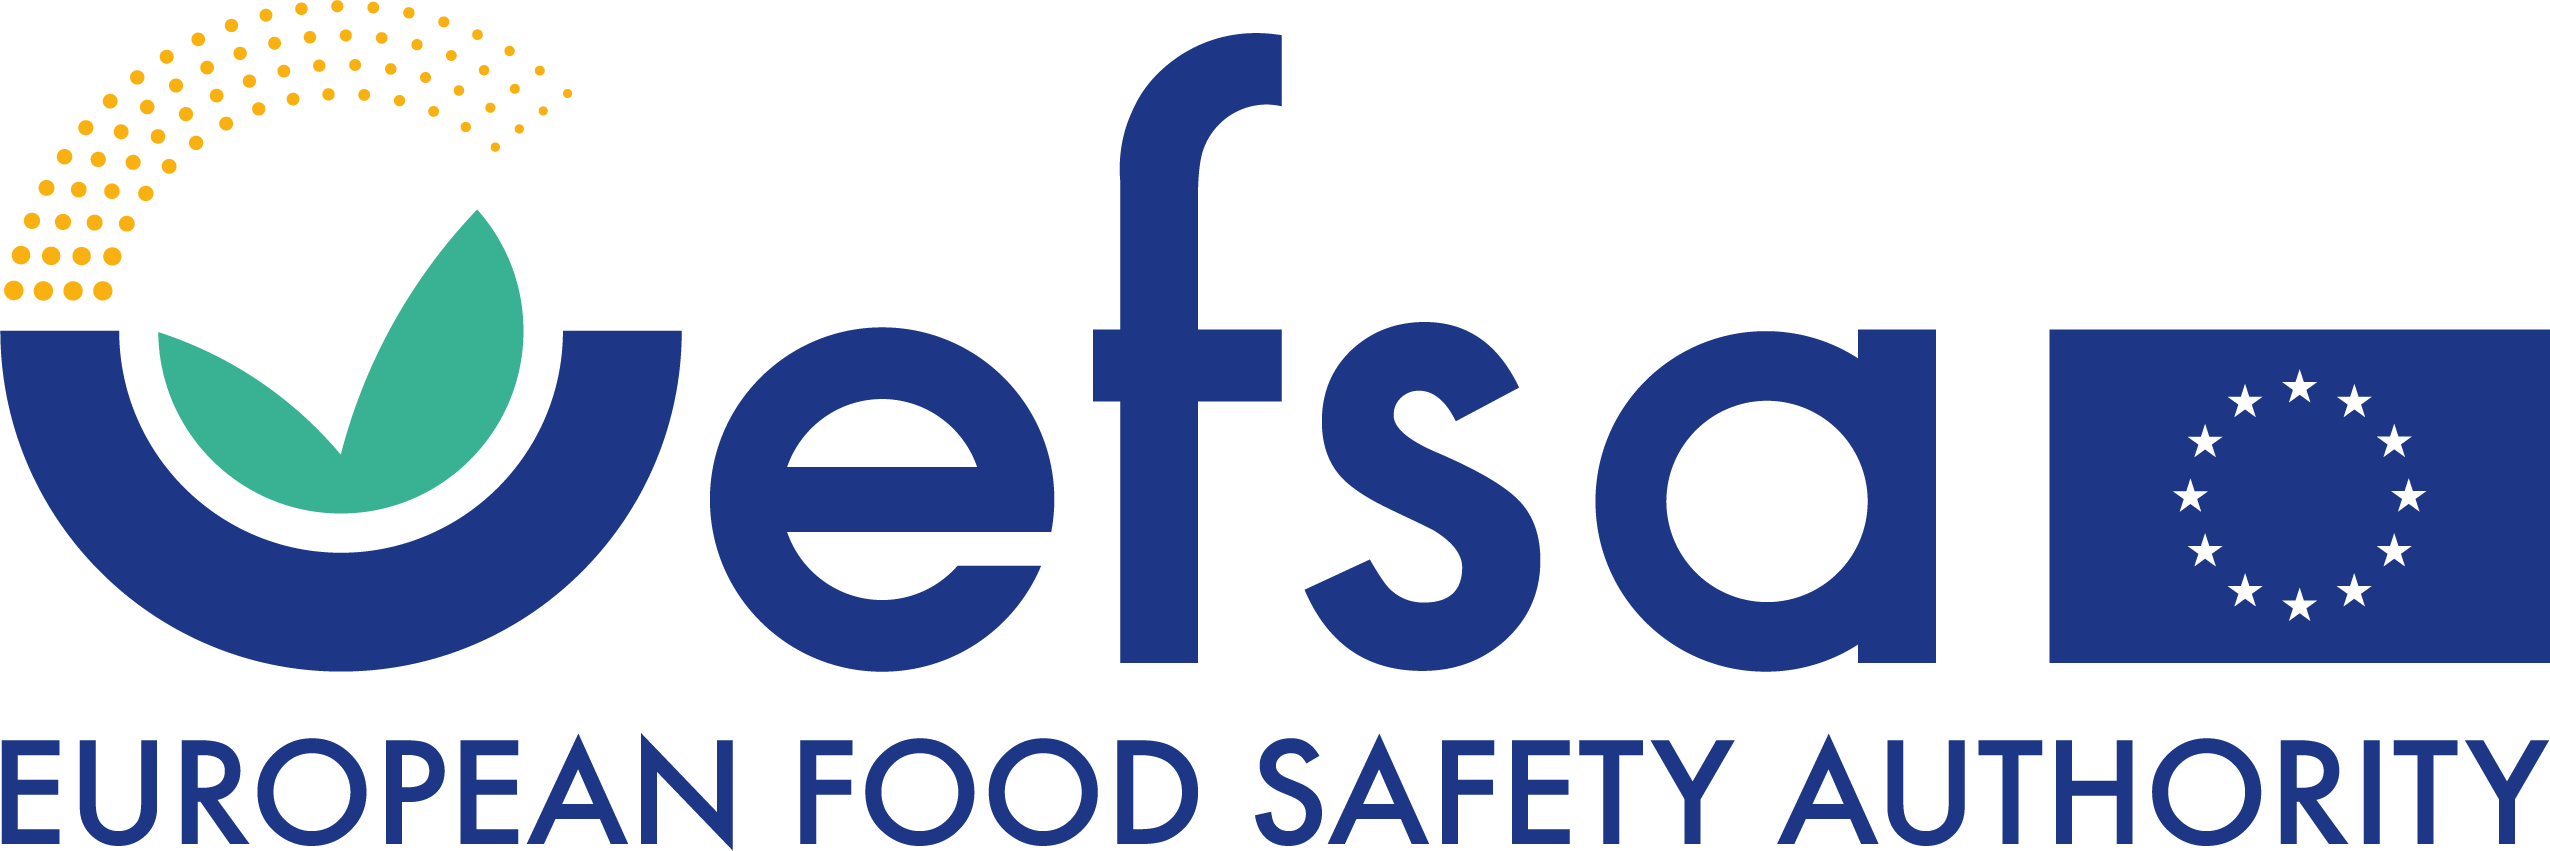 EFSA EUropean Food Safety Authority logo